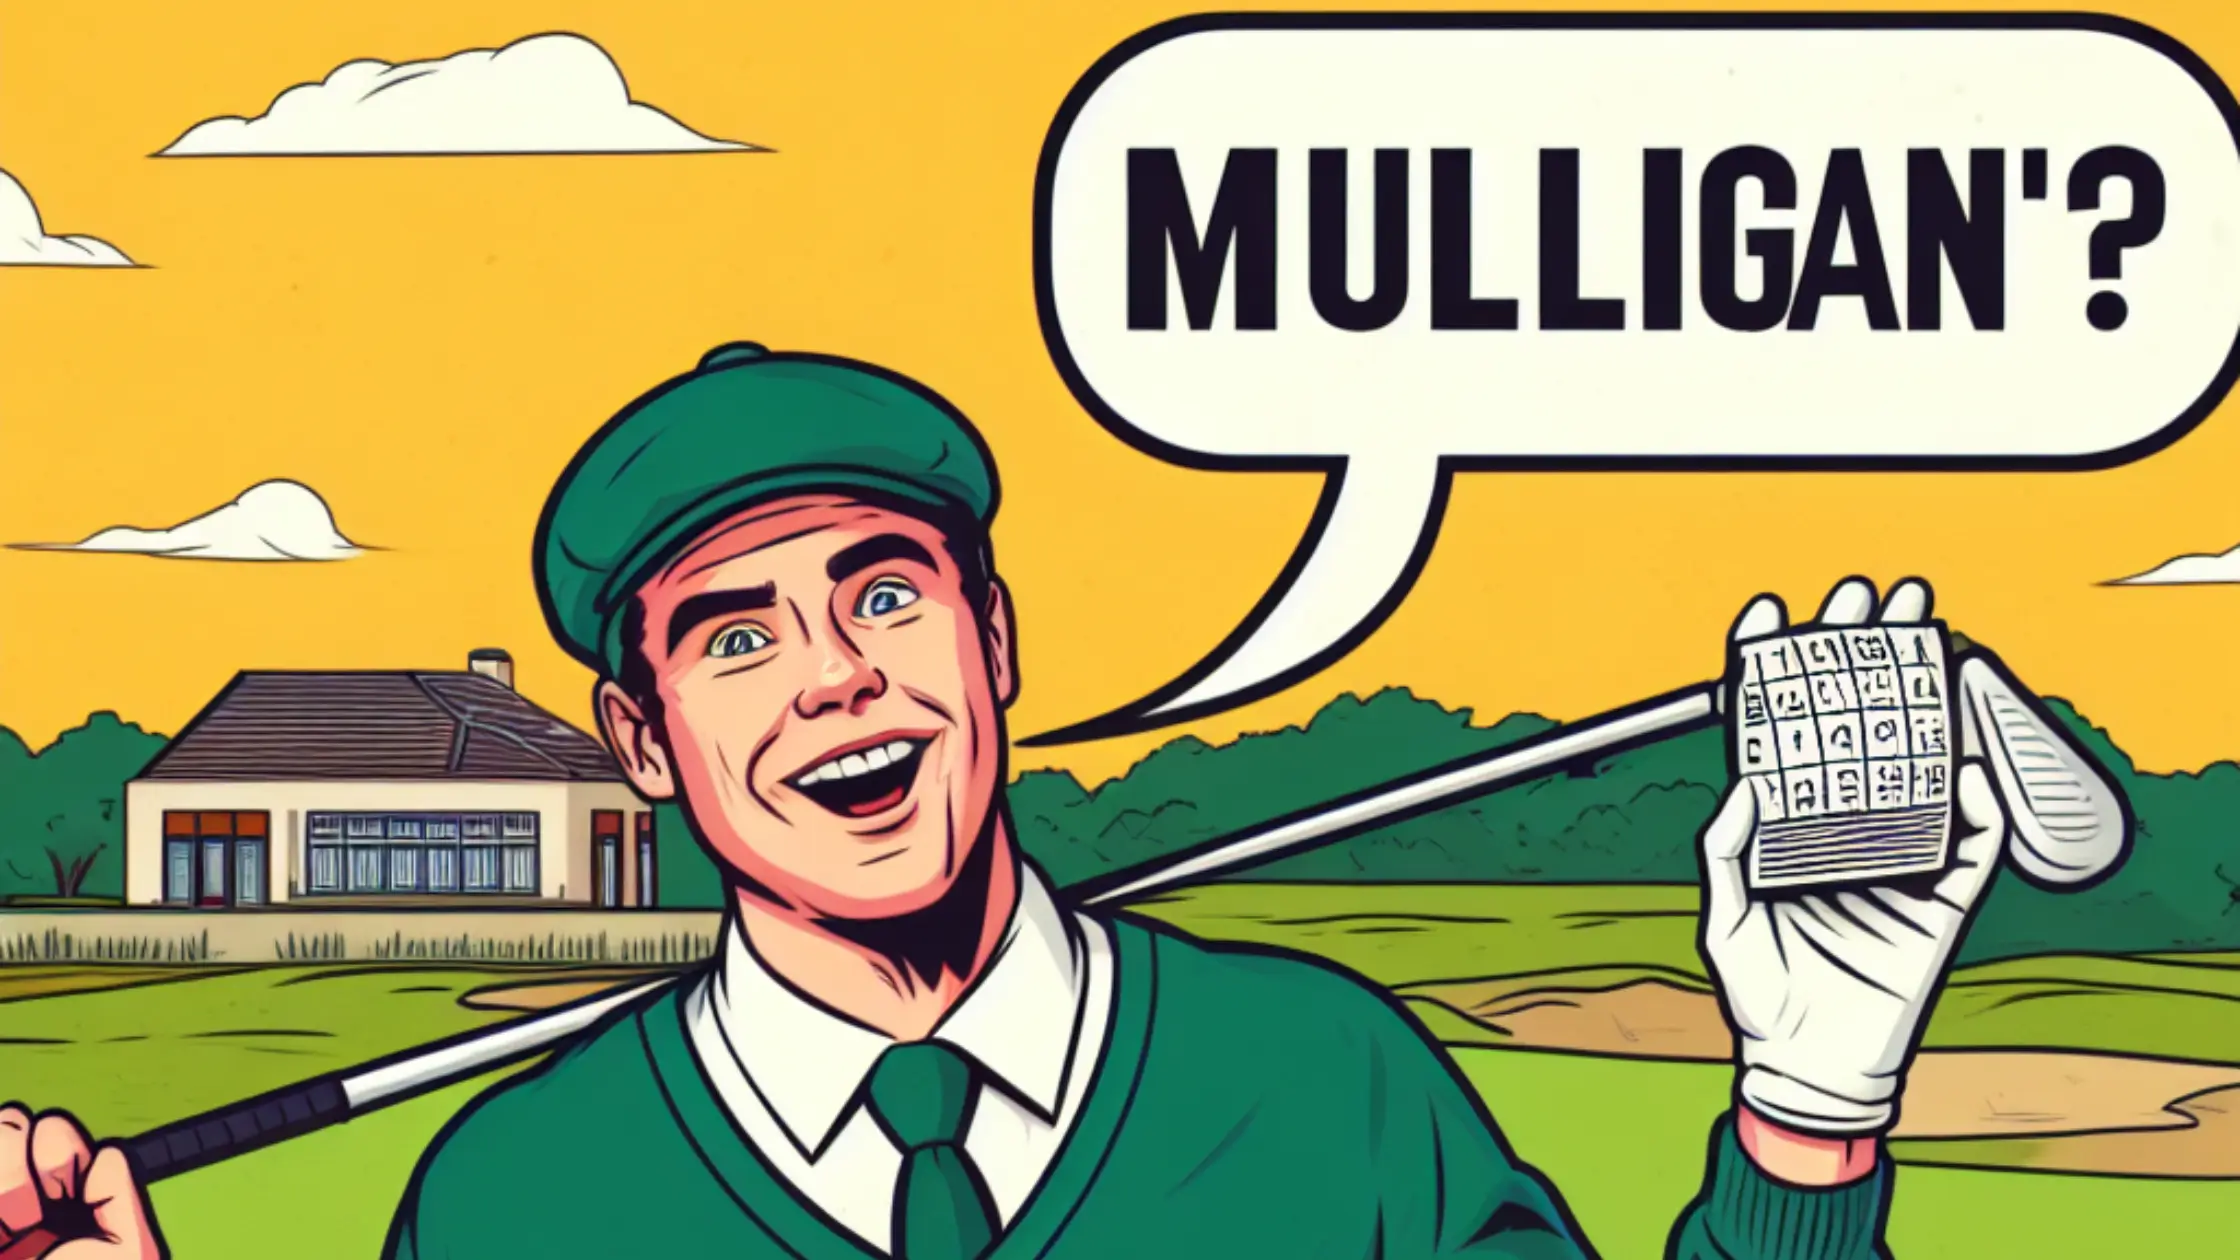 Mulligan Mean in Golf